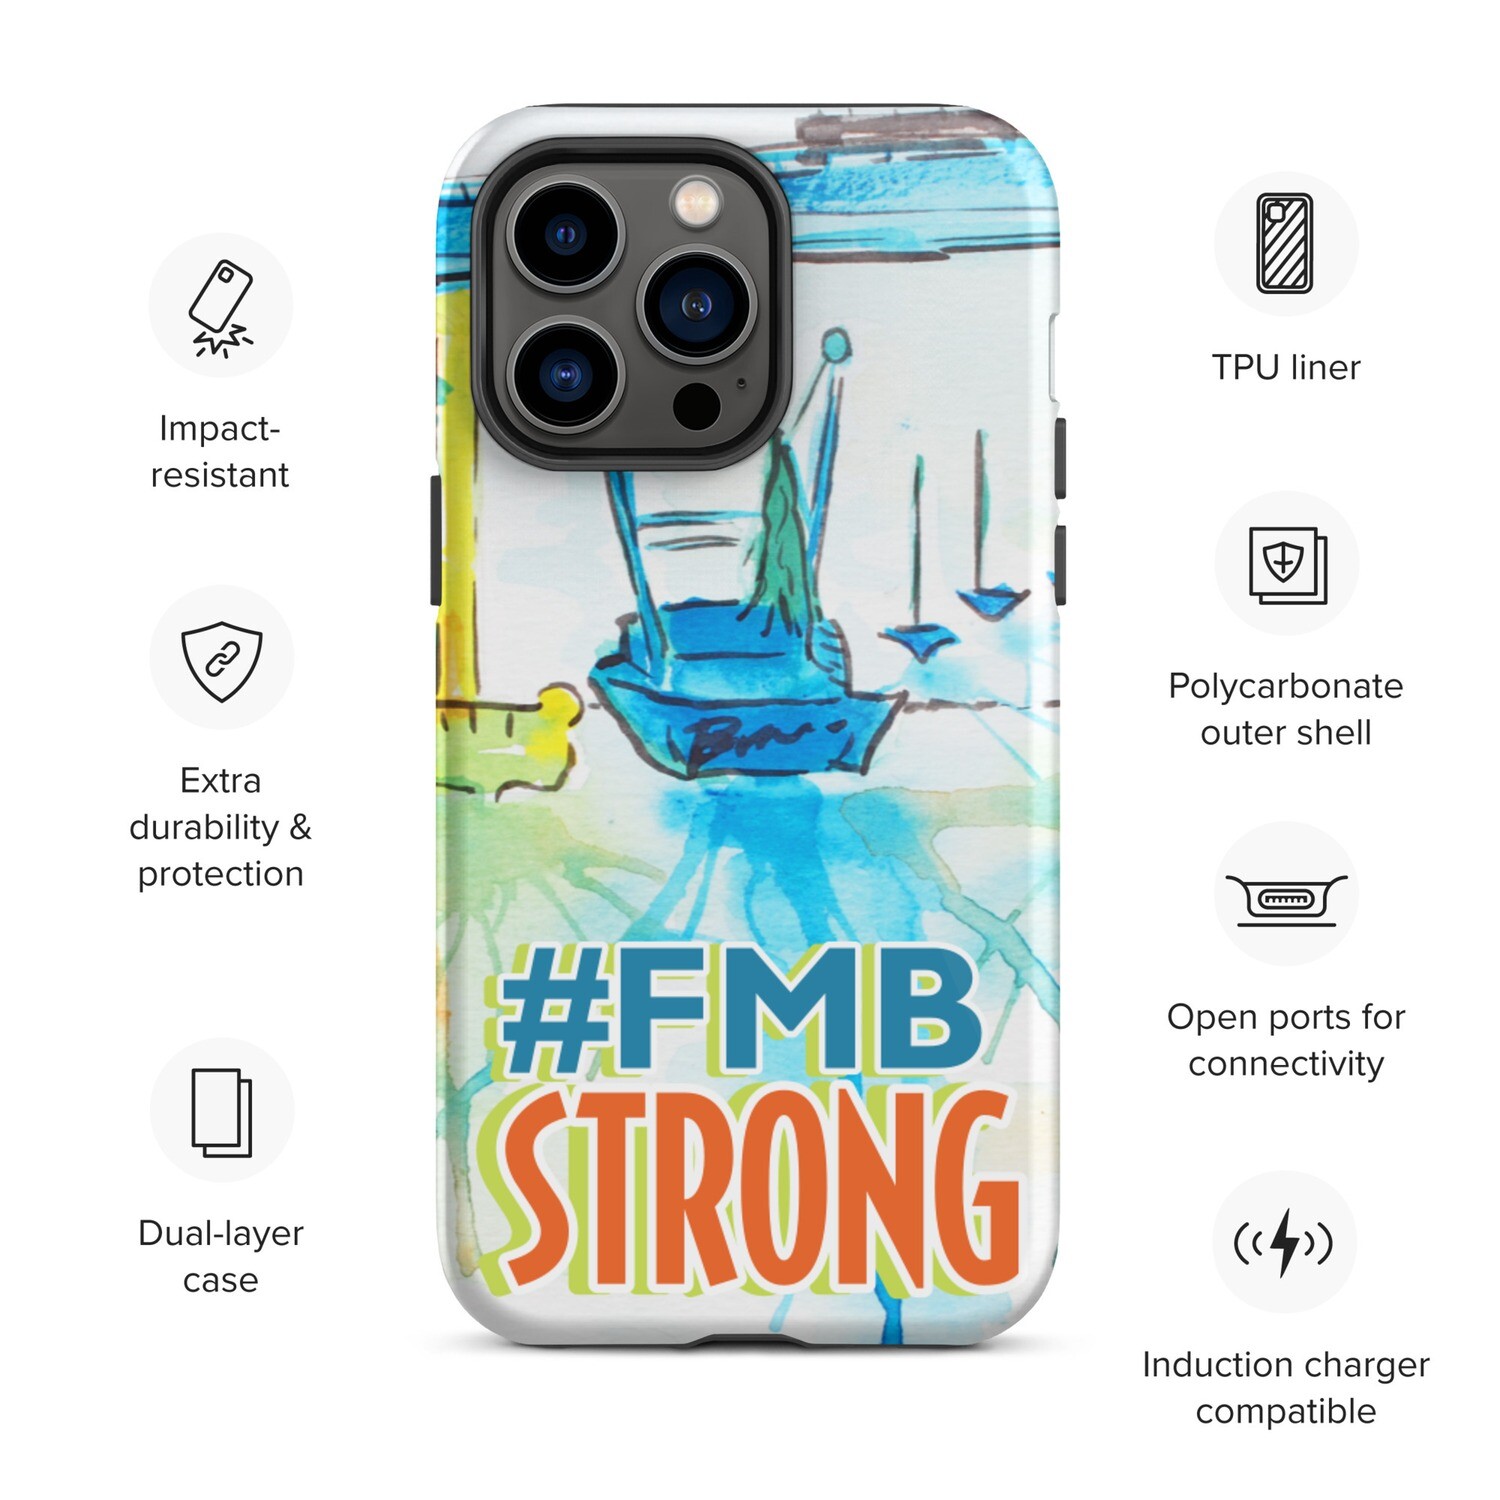 FMB STRONG - Tough iPhone case